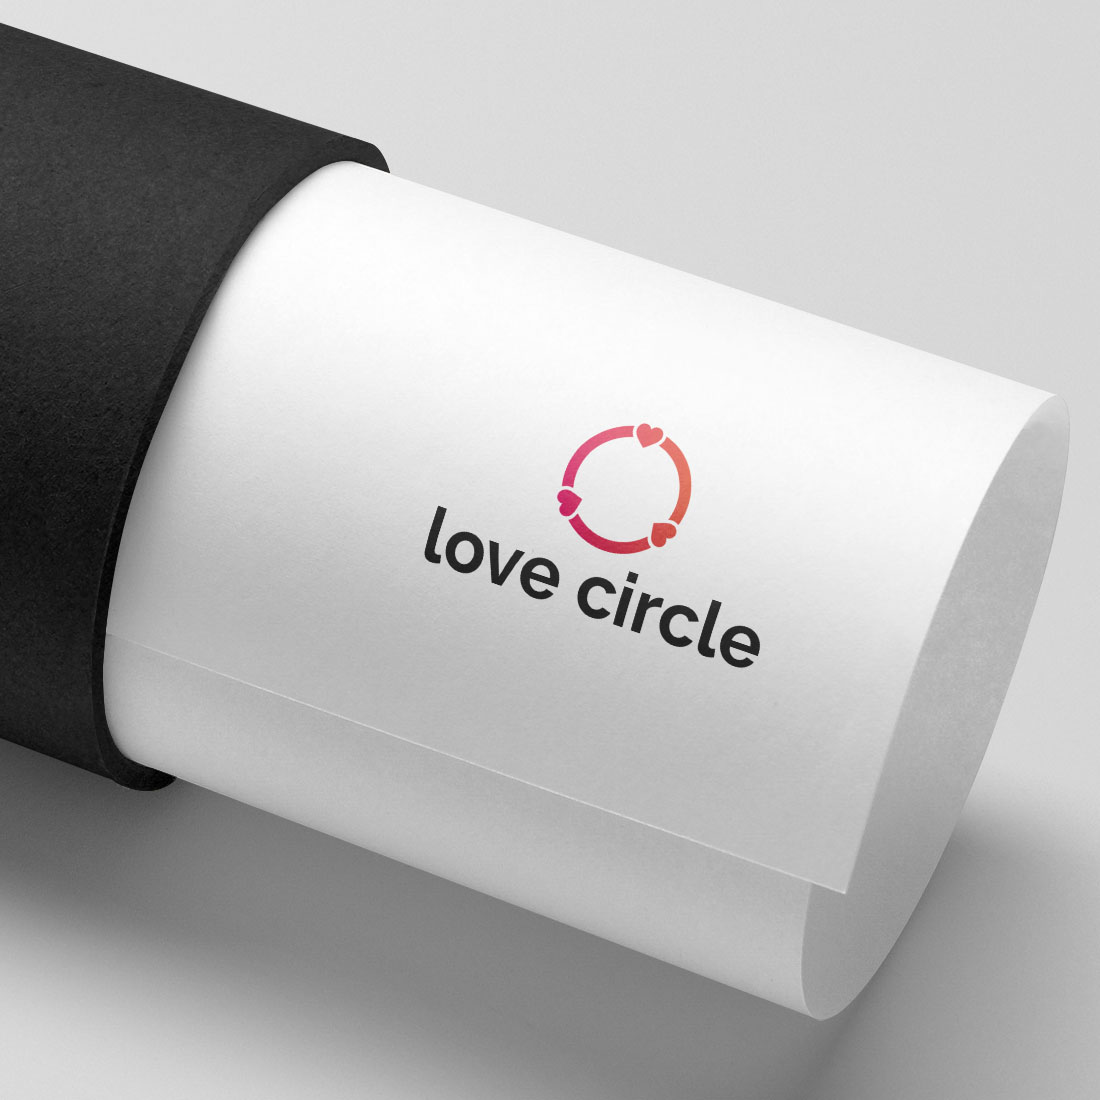 Minimal Love Circle Logo Design cover image.